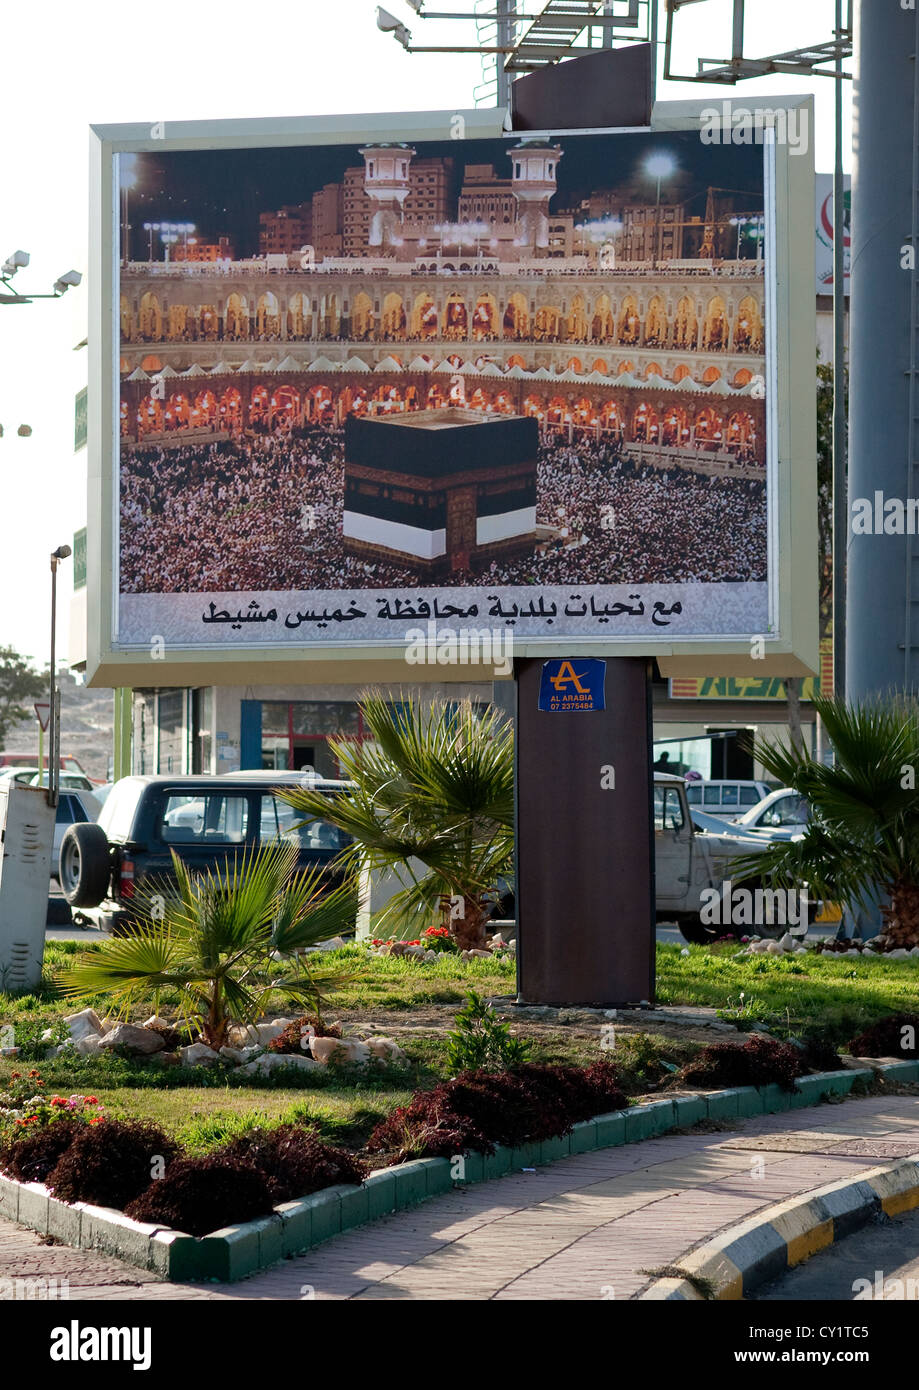 Mecca Adverstisement, Saudi Arabia Stock Photo